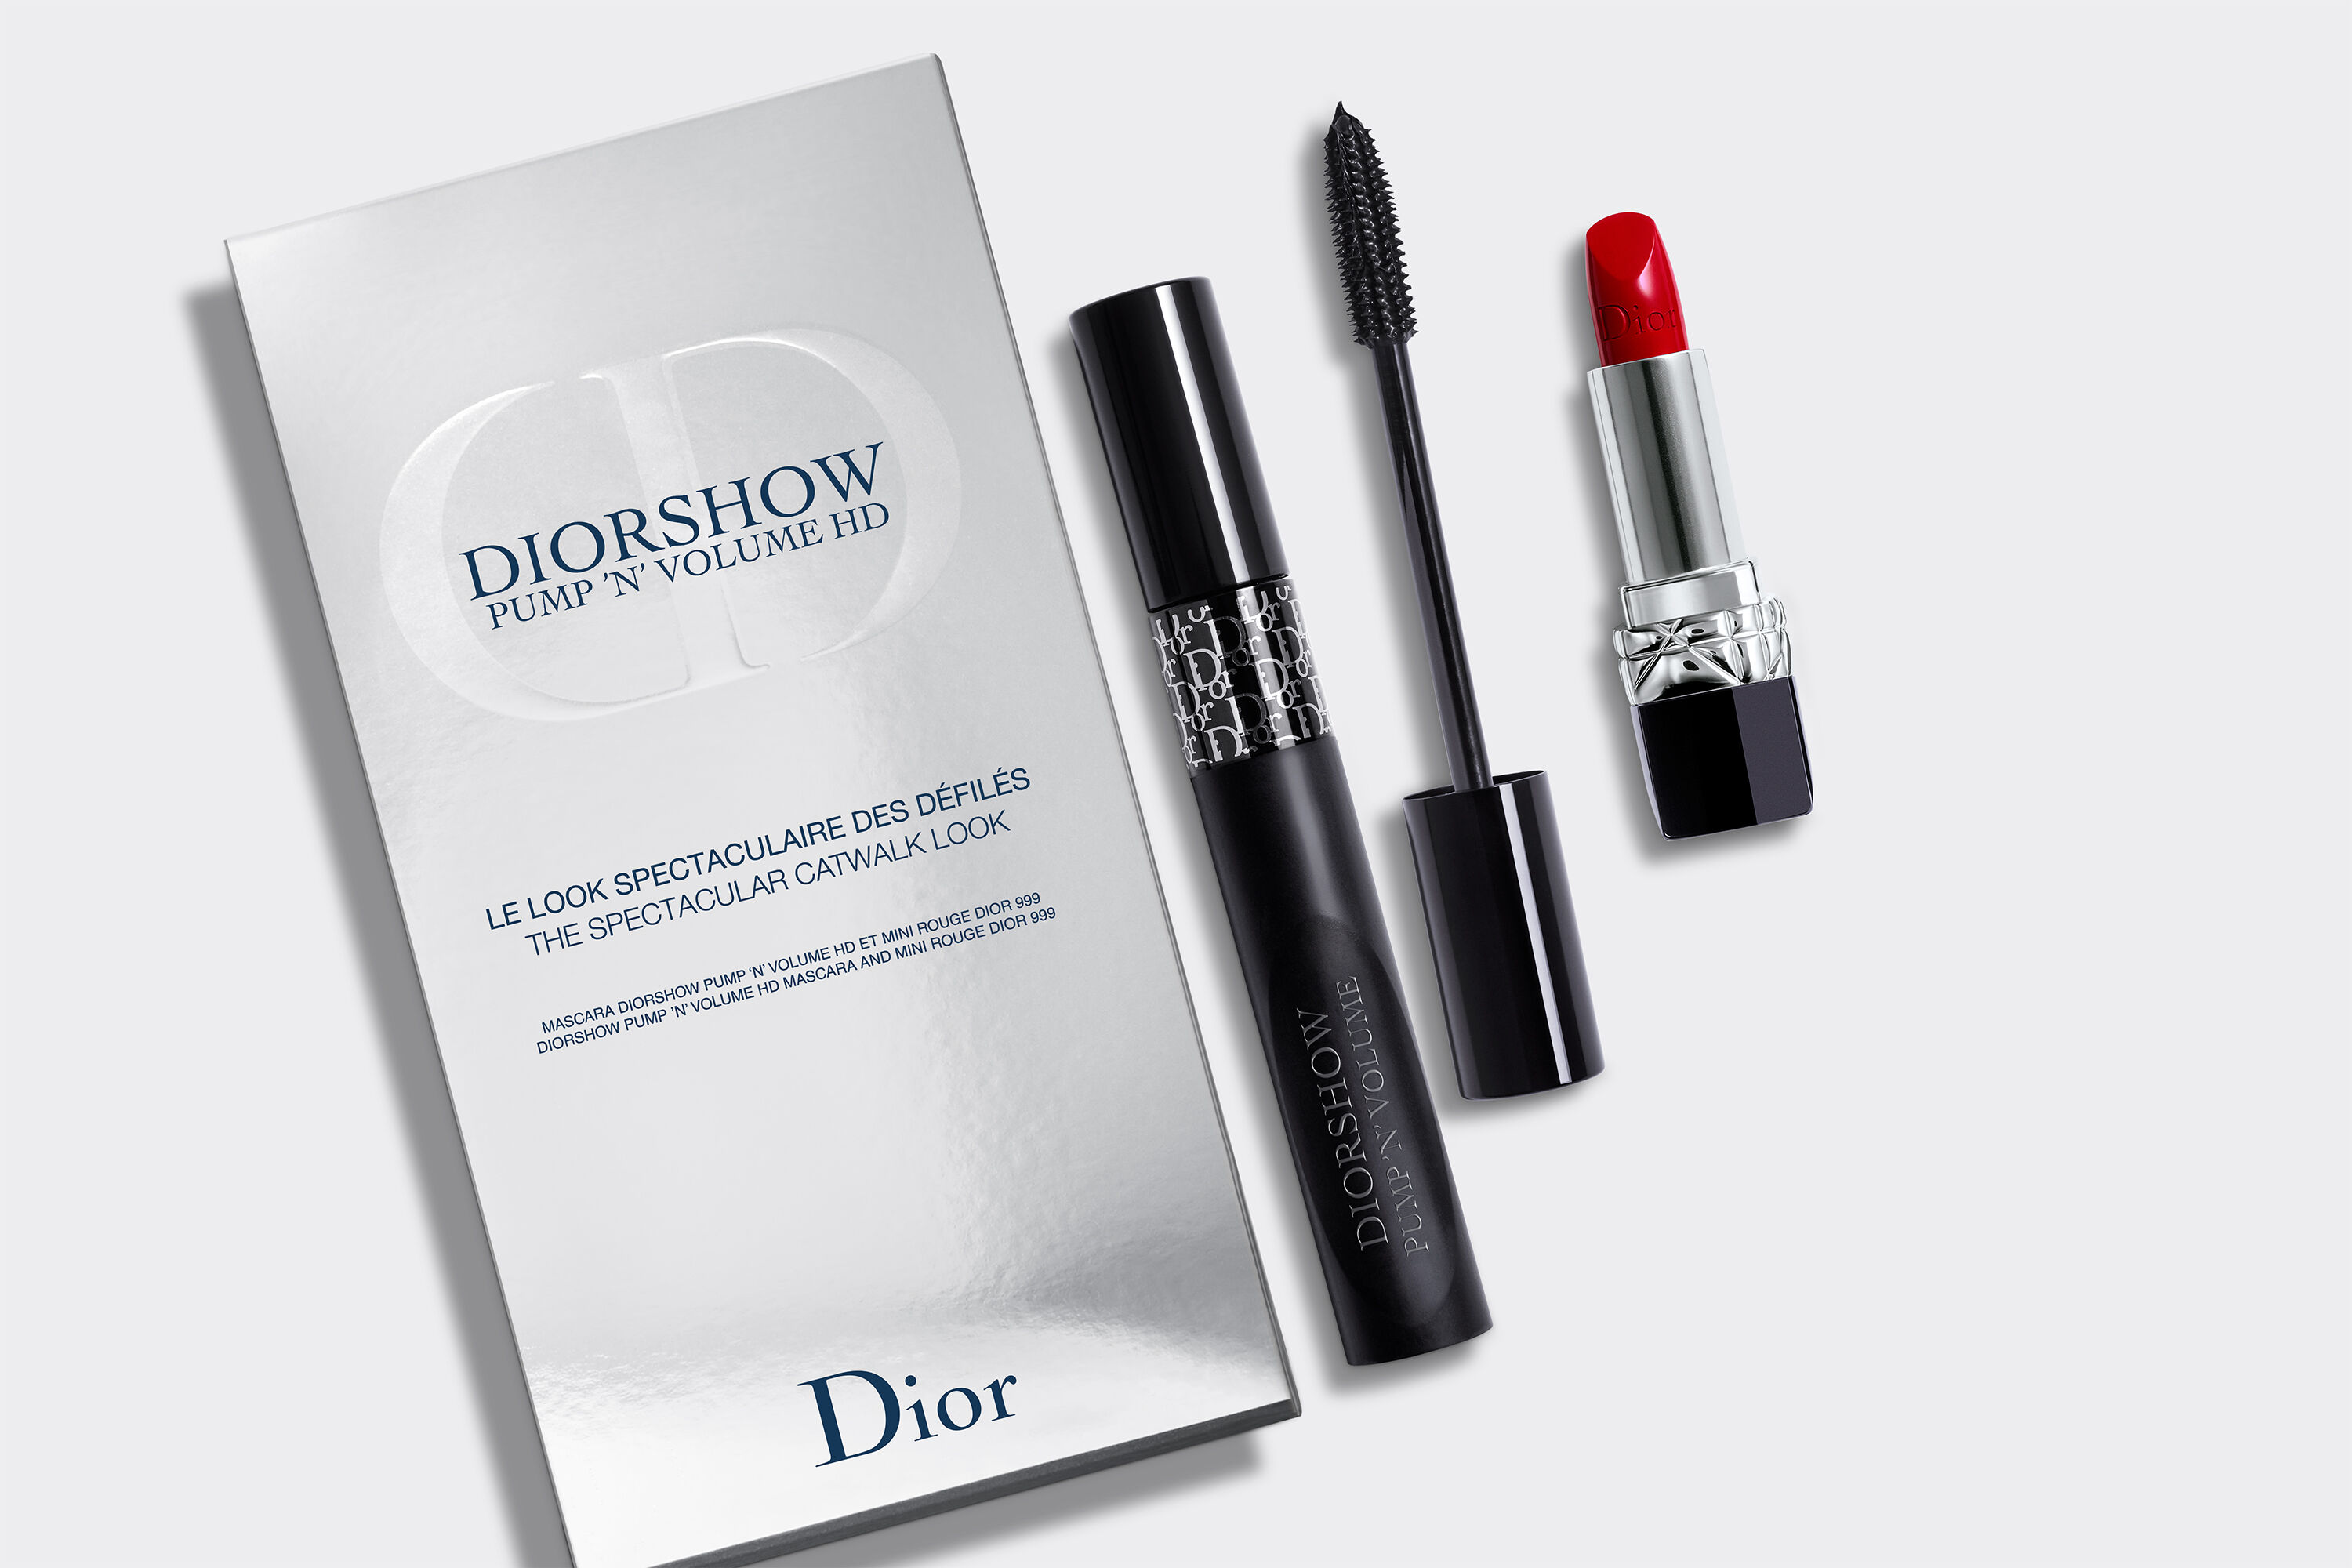 Christian Dior  Diorshow Pump N Volume HD Mascara 6g021oz  Mascara   Free Worldwide Shipping  Strawberrynet VN